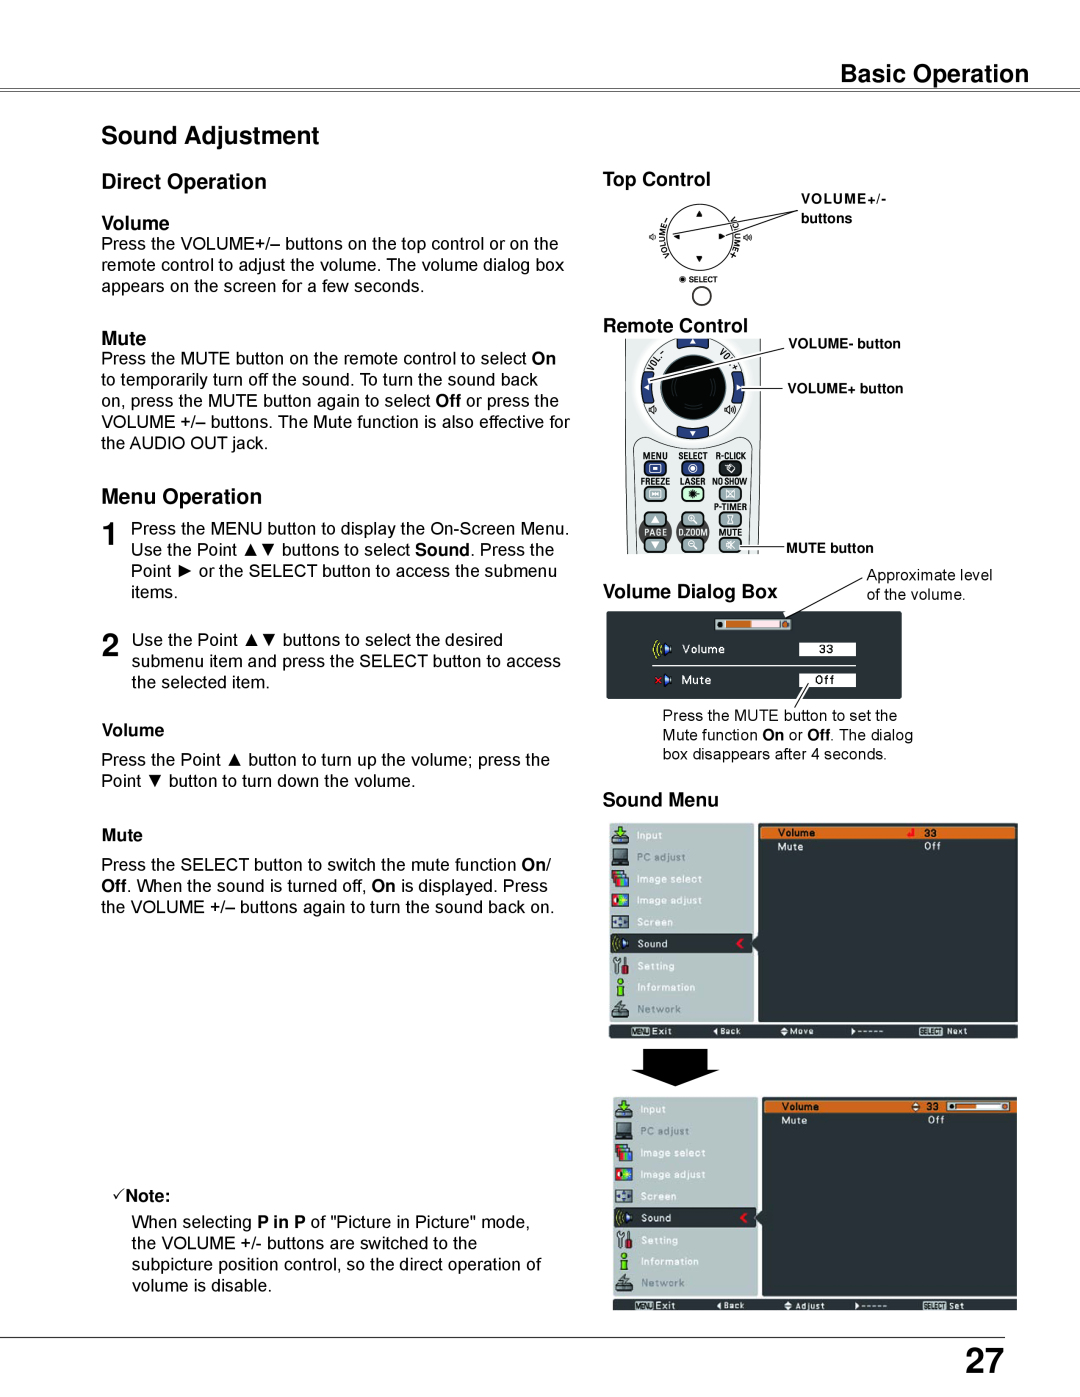 Eiki LC-WB42N Sound Adjustment, Direct Operation, Menu Operation, Mute, Volume Dialog Box, Sound Menu, Basic Operation 